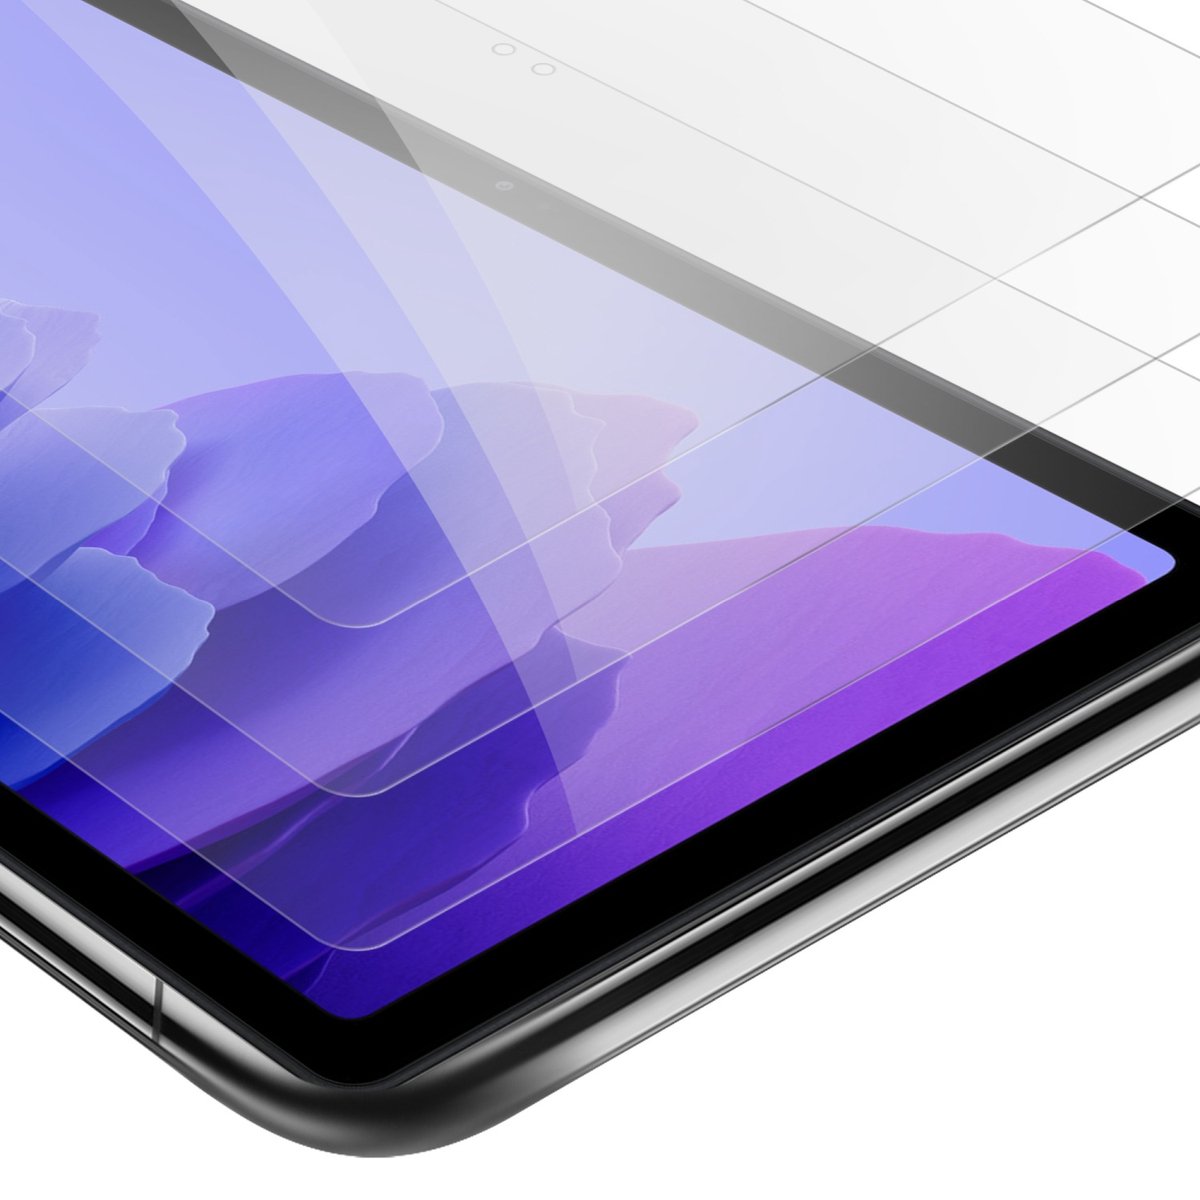 Cadorabo 3x Screenprotector voor Samsung Galaxy Tab A7 (10.4 inch) in KRISTALHELDER - Getemperd Pantser Film (Tempered) Display beschermend glas in 9H hardheid met 3D Touch